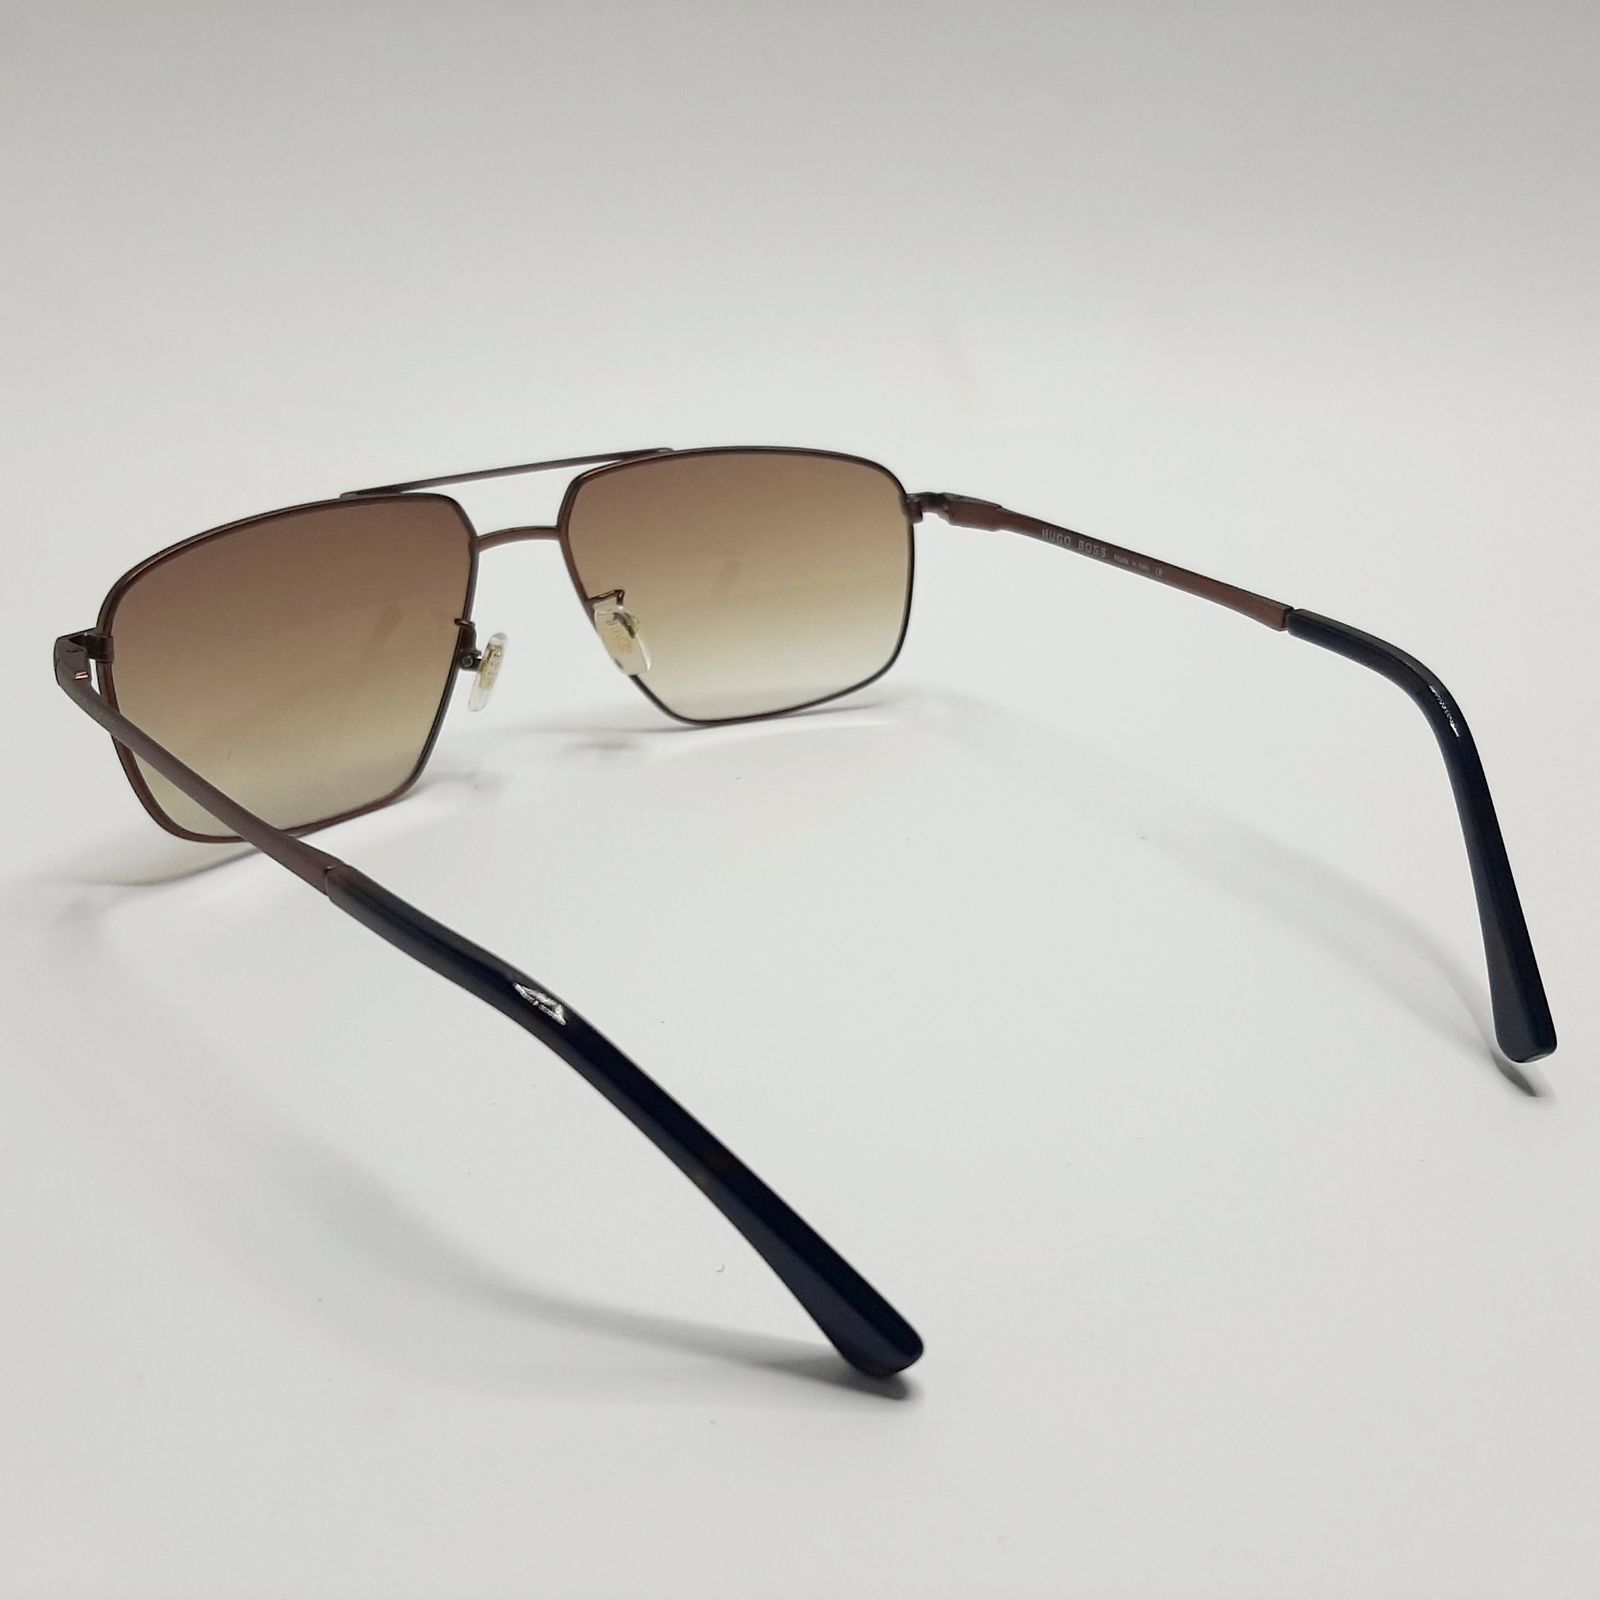 عینک آفتابی هوگو باس مدل HB1066c5 -  - 5